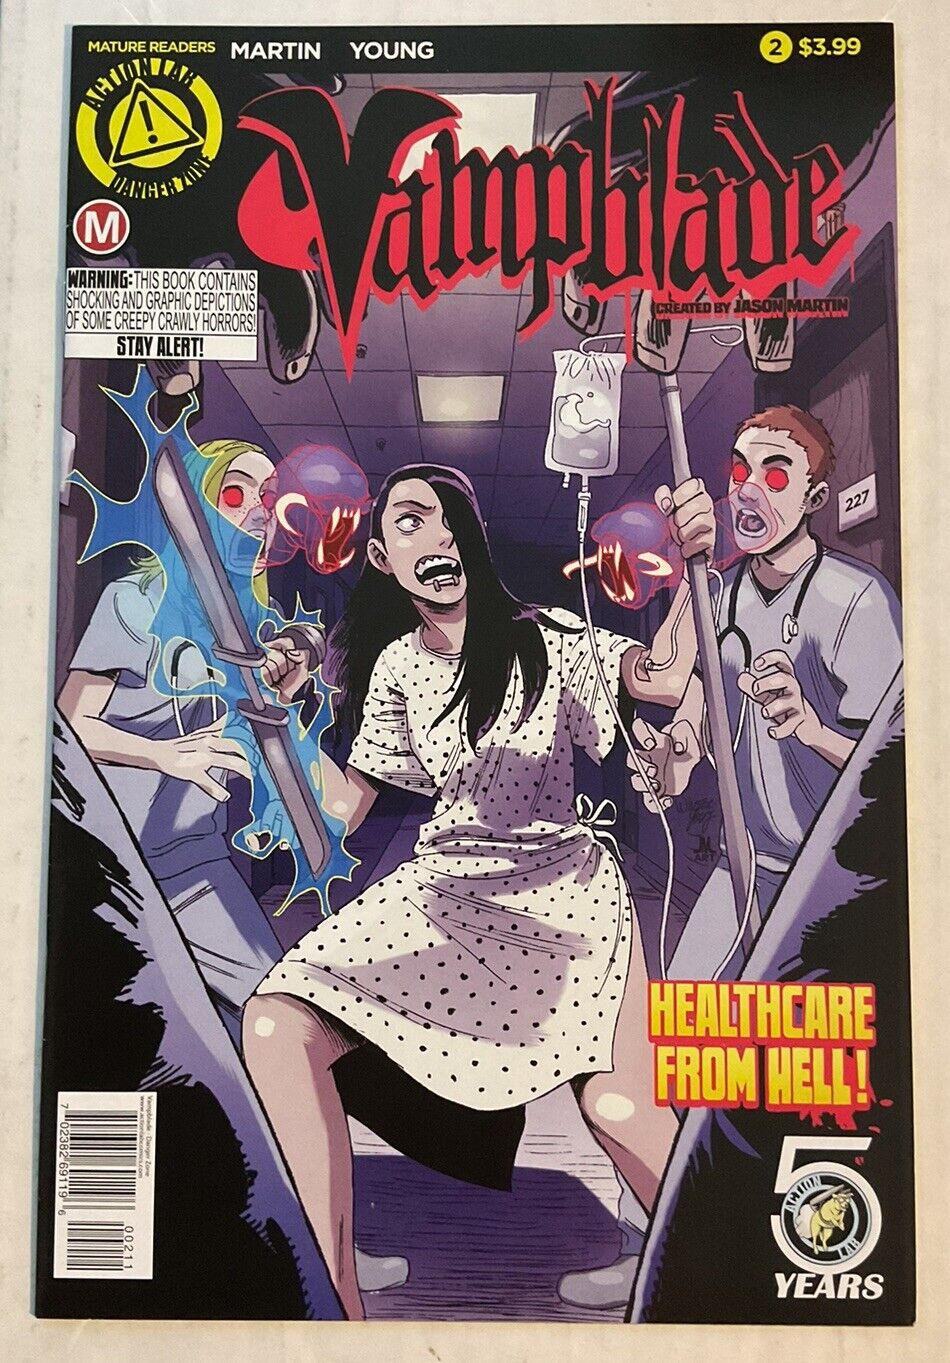 Vampblade #2 Action Labs